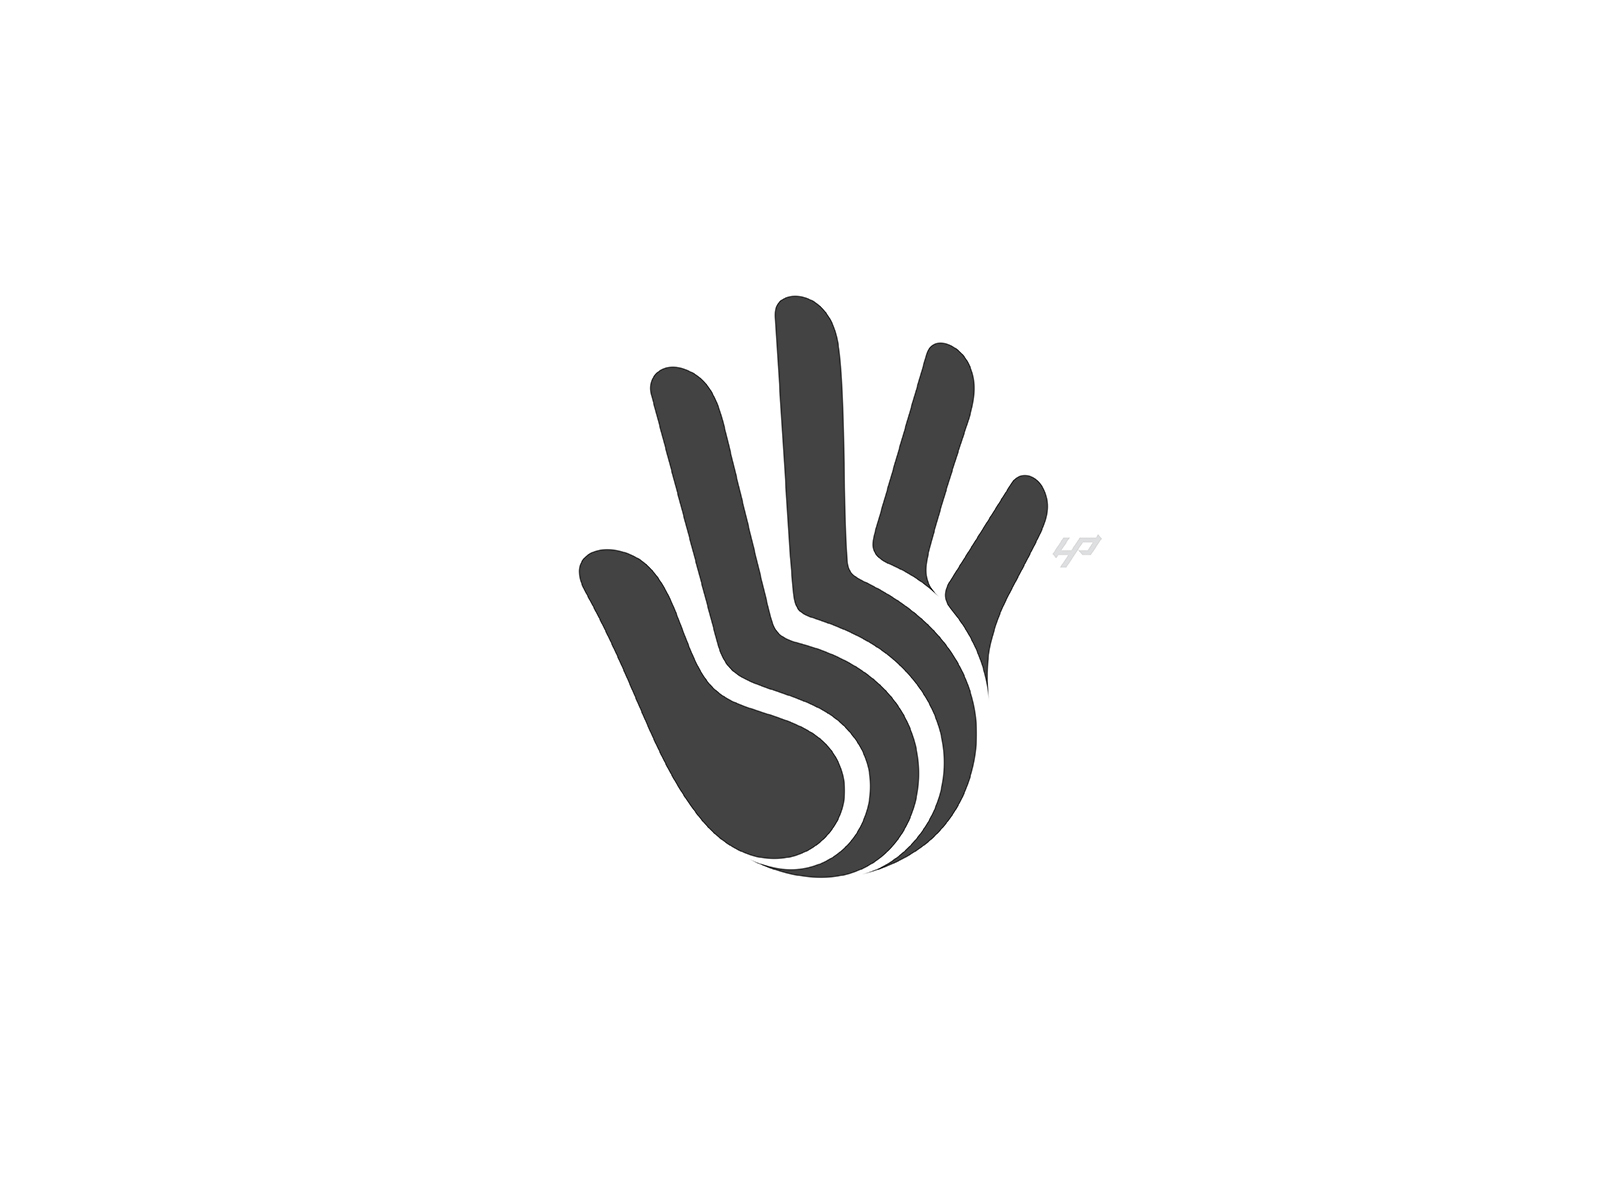  Hand logo  by Yoga Perdana on Dribbble